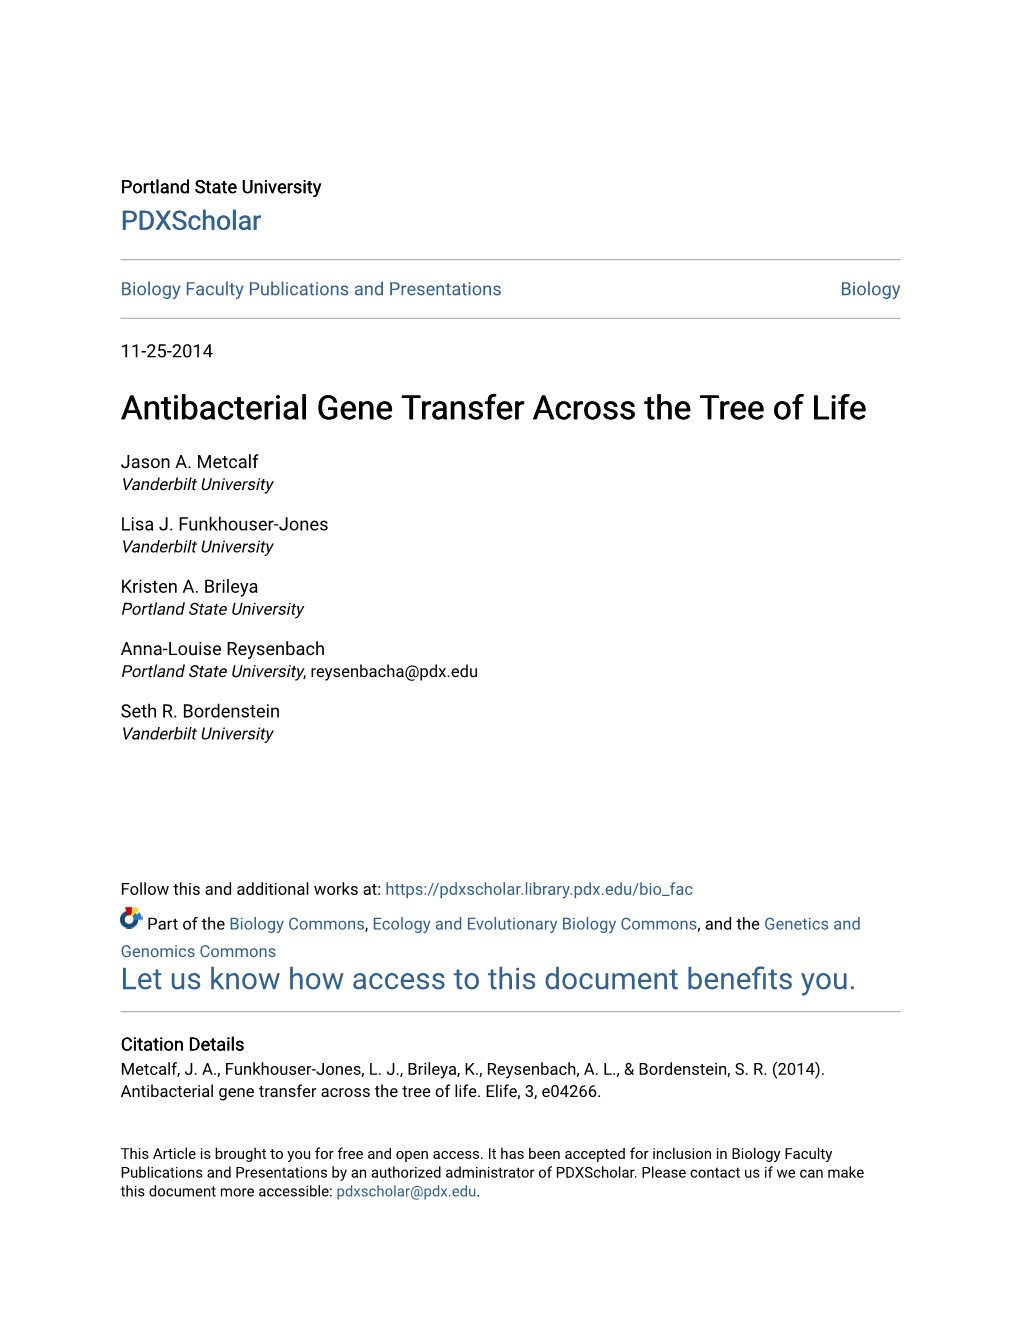 Antibacterial Gene Transfer Across the Tree of Life